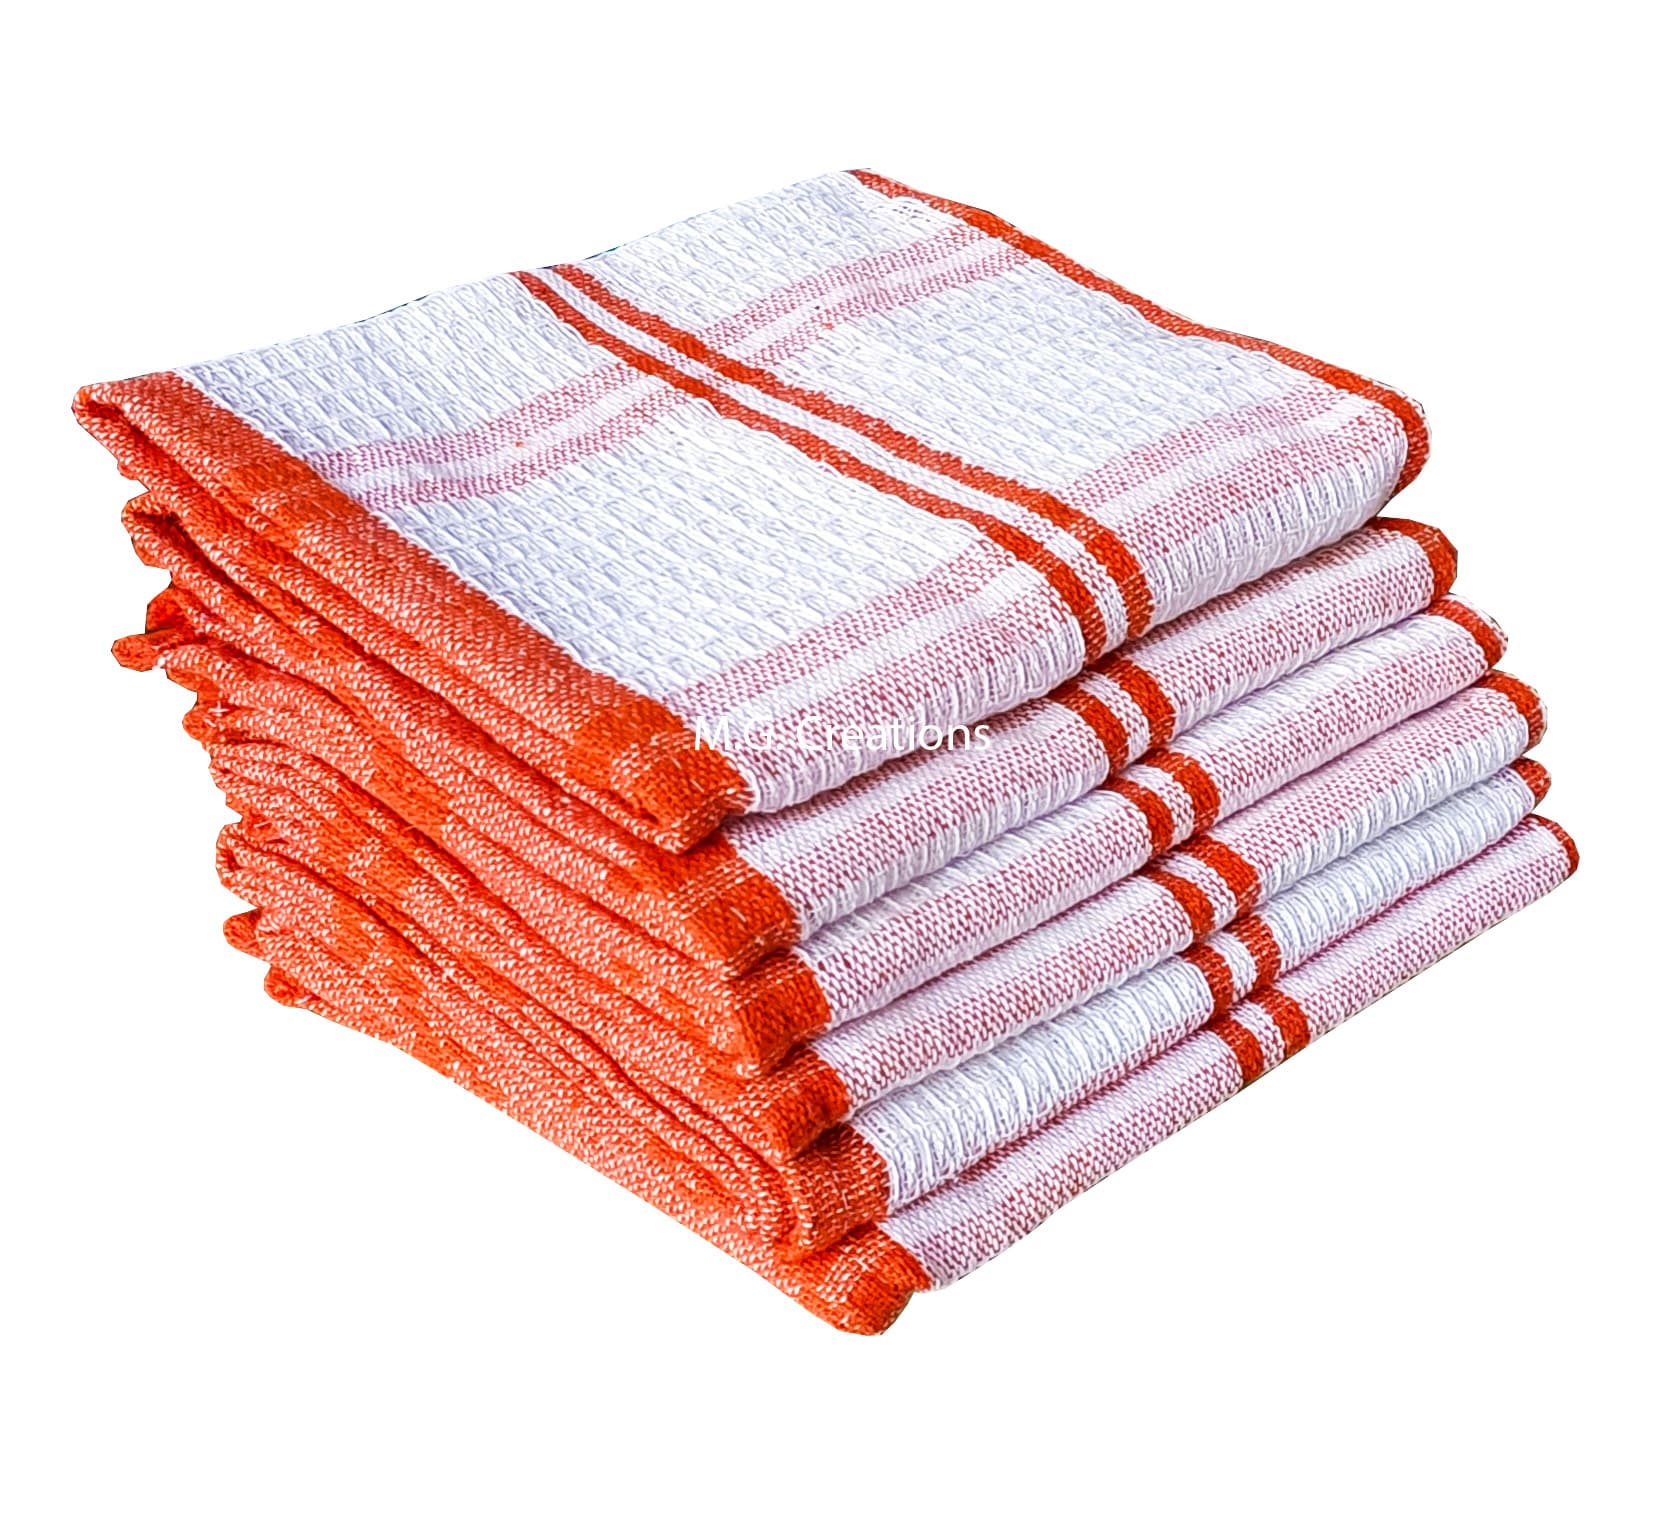 Kitchen towels manufacturers